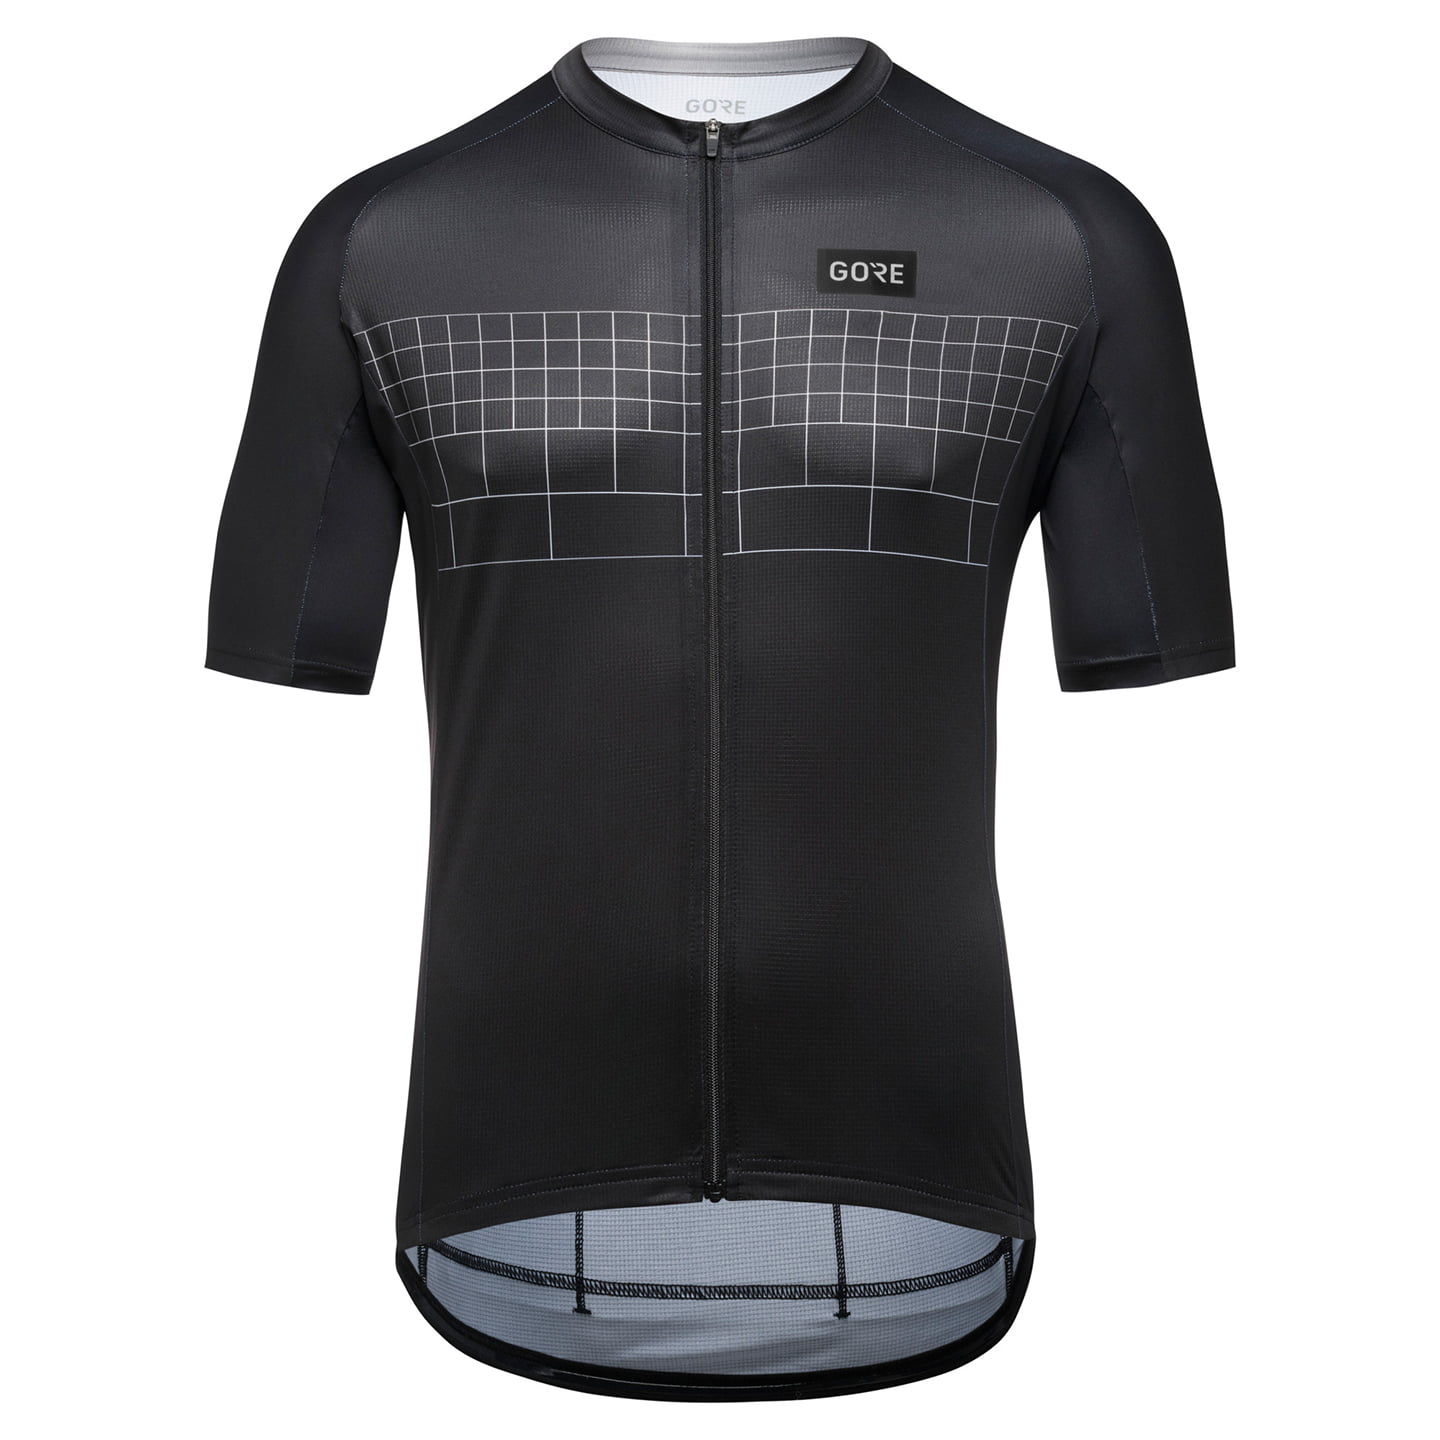 GORE WEAR Grid Fade 2.0 Short Sleeve Jersey Short Sleeve Jersey, for men, size S, Cycling jersey, Cycling clothing